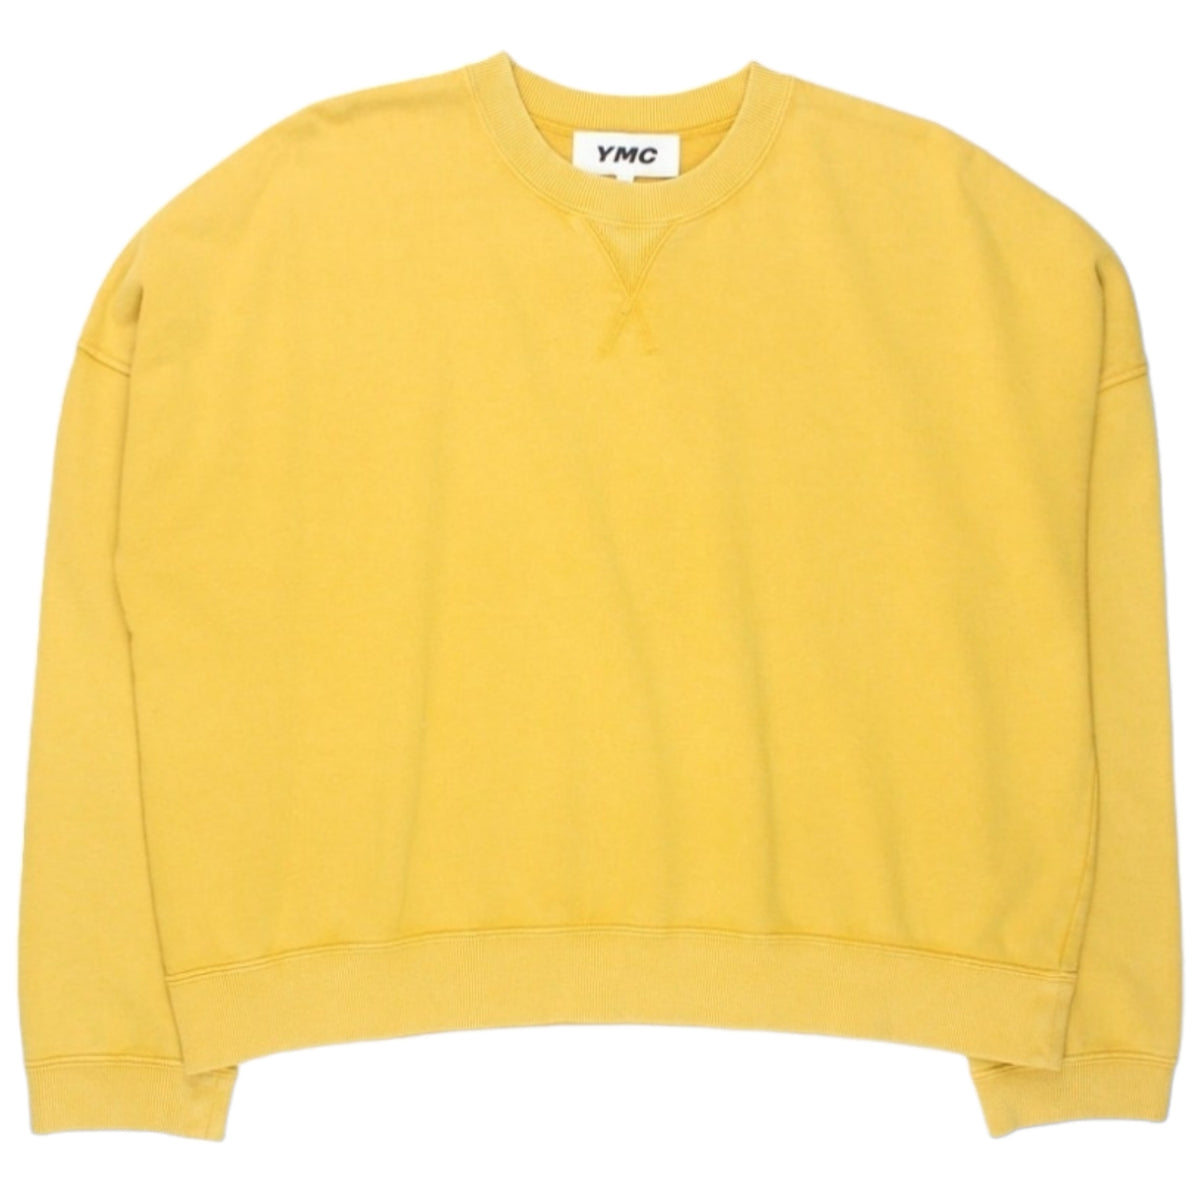 YMC Golden Yellow Cropped Sweatshirt